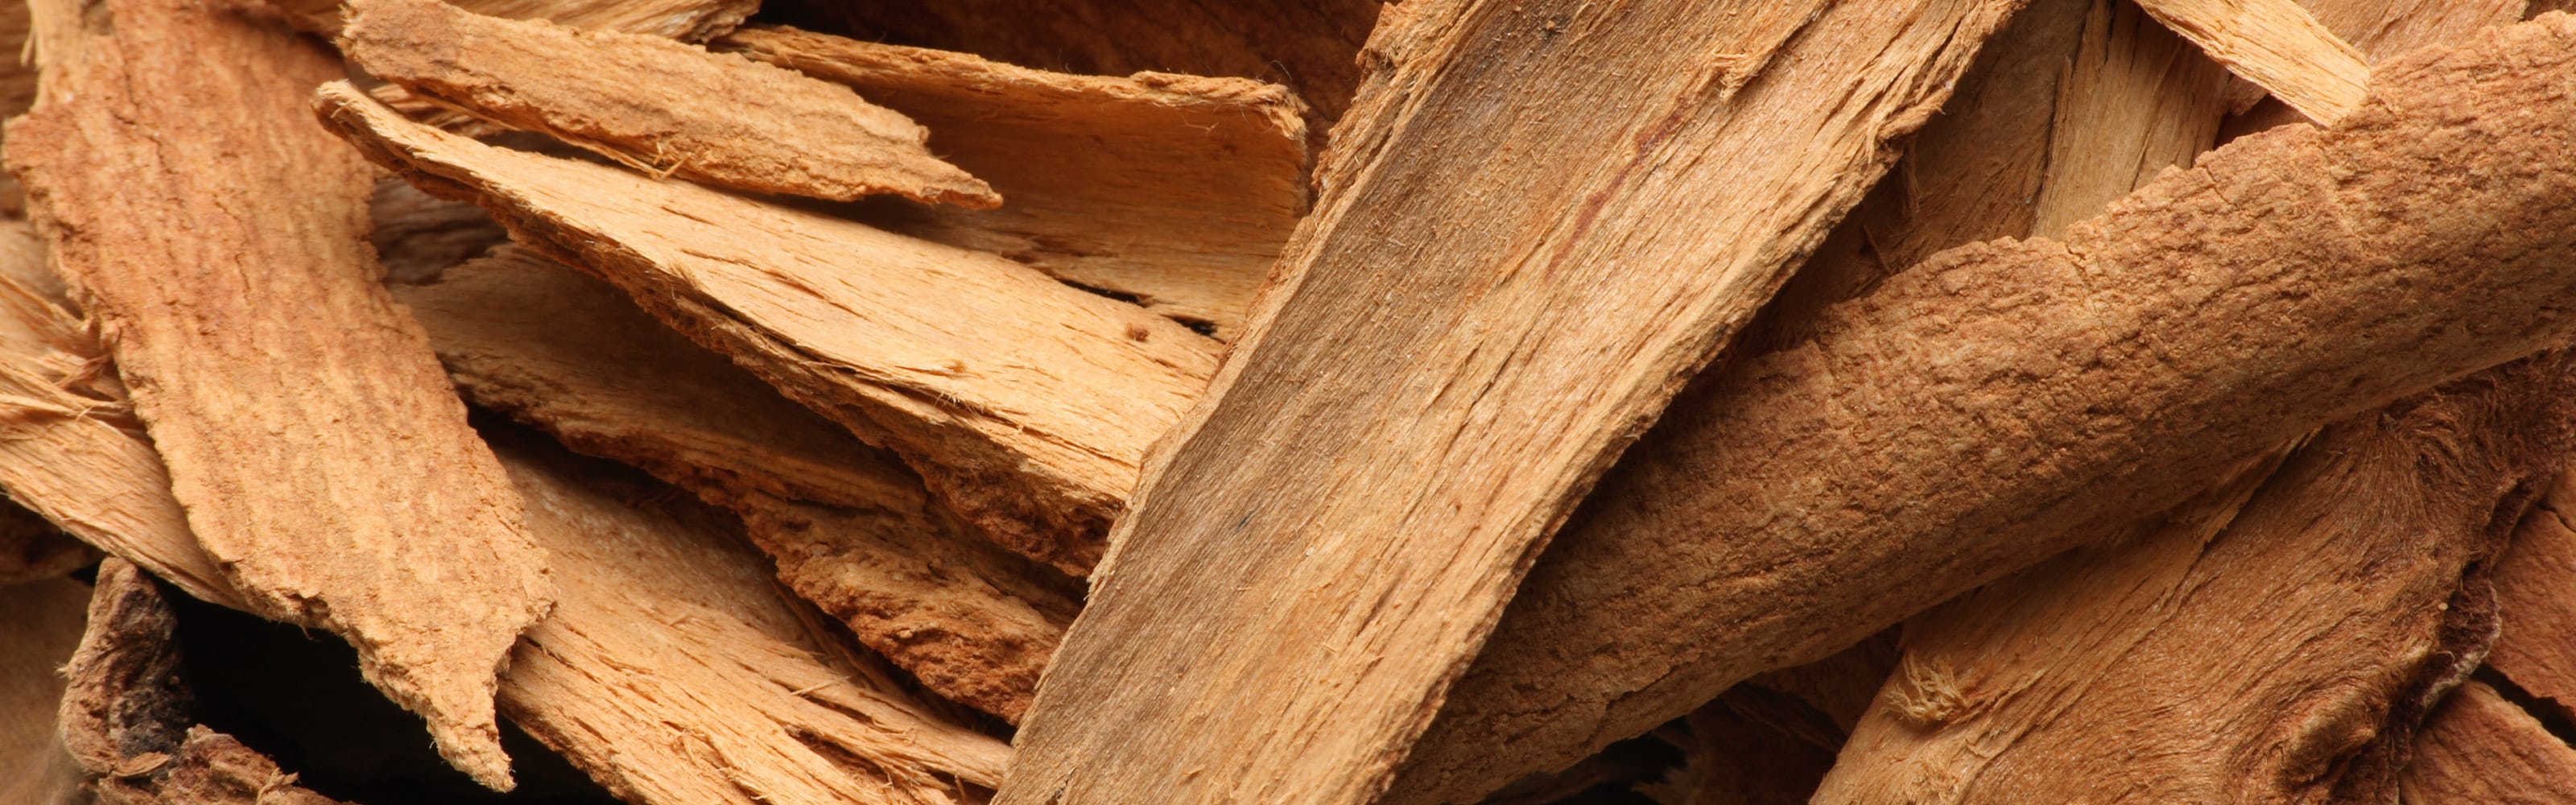 Cinnamon bark shutterstock 24216835